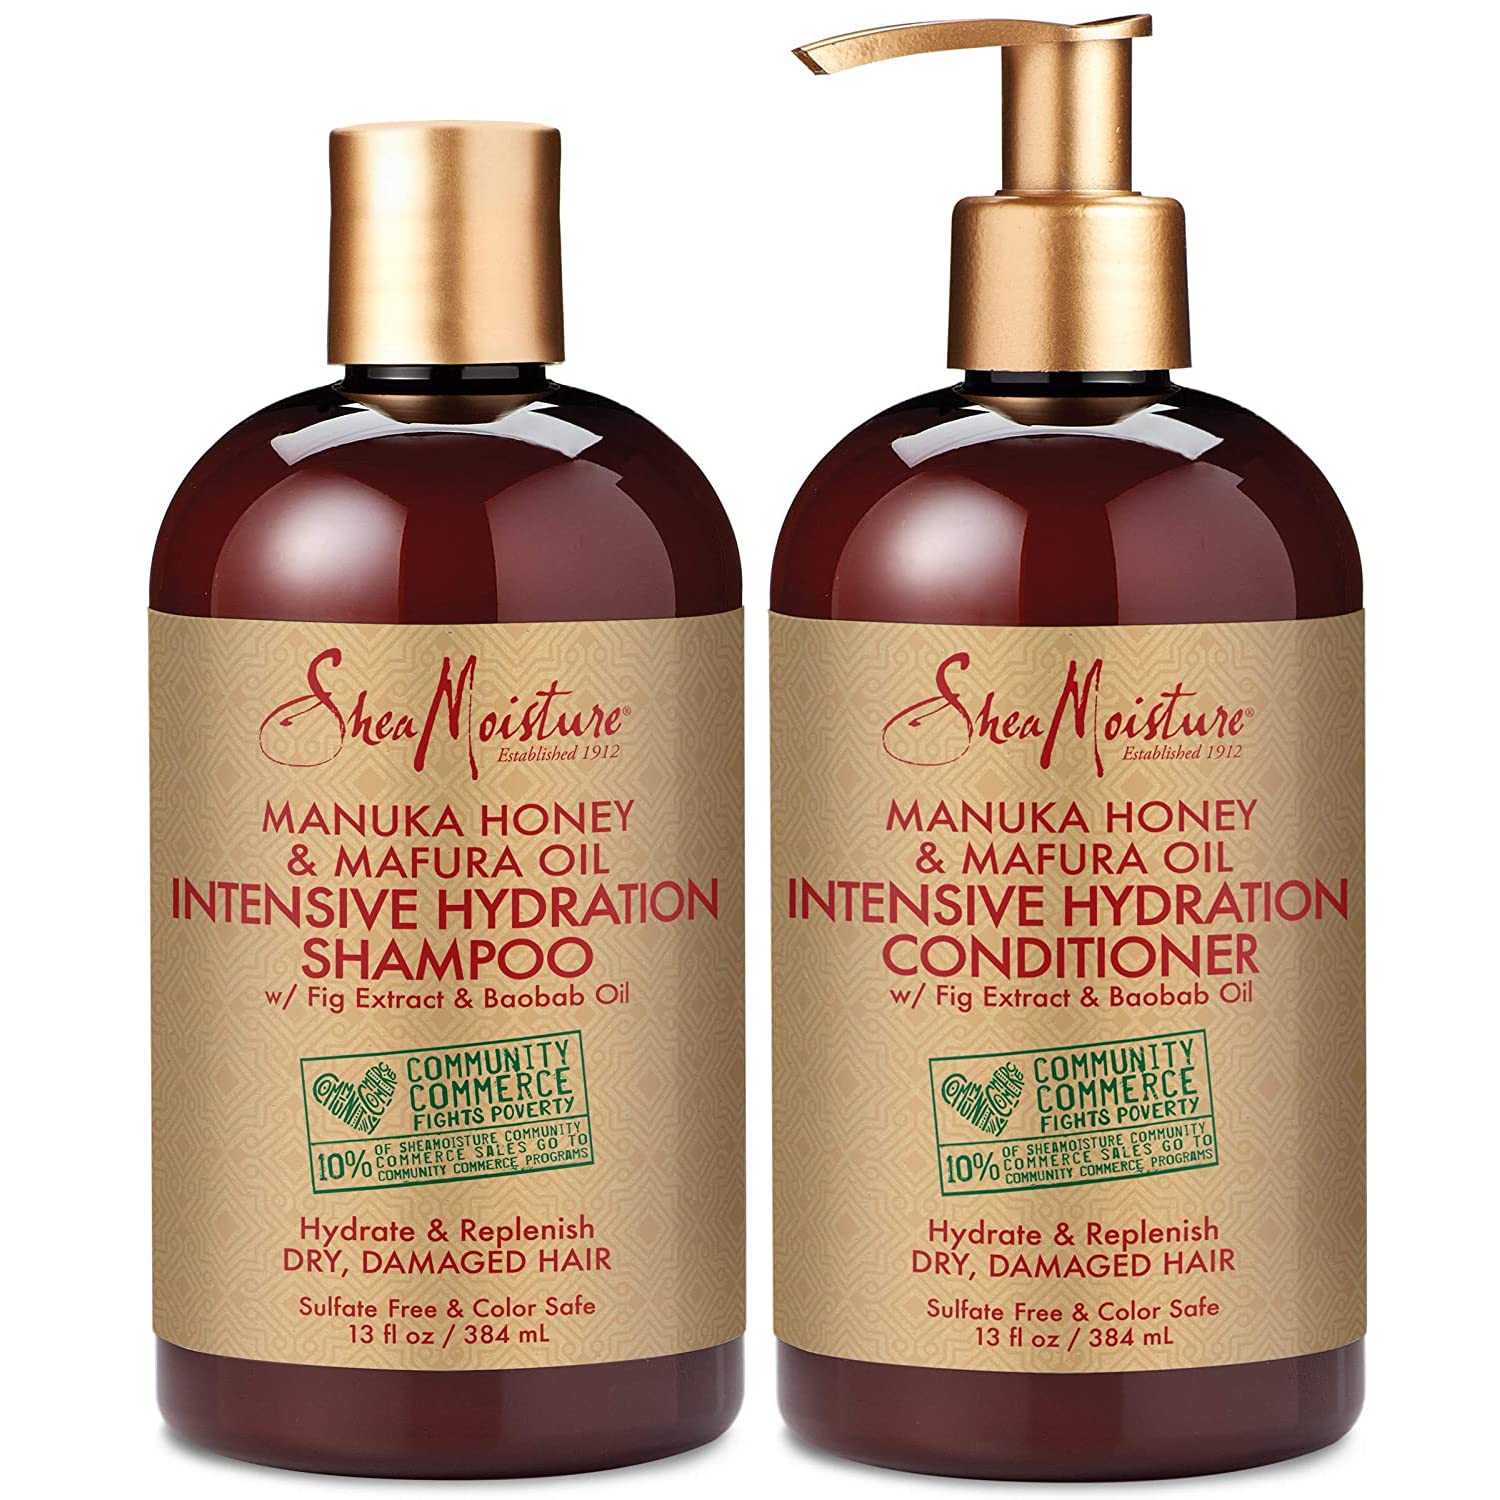 Shea Moisture Manuka Honey & Mafura Oil Intensive Hydration Shampoo and Conditioner